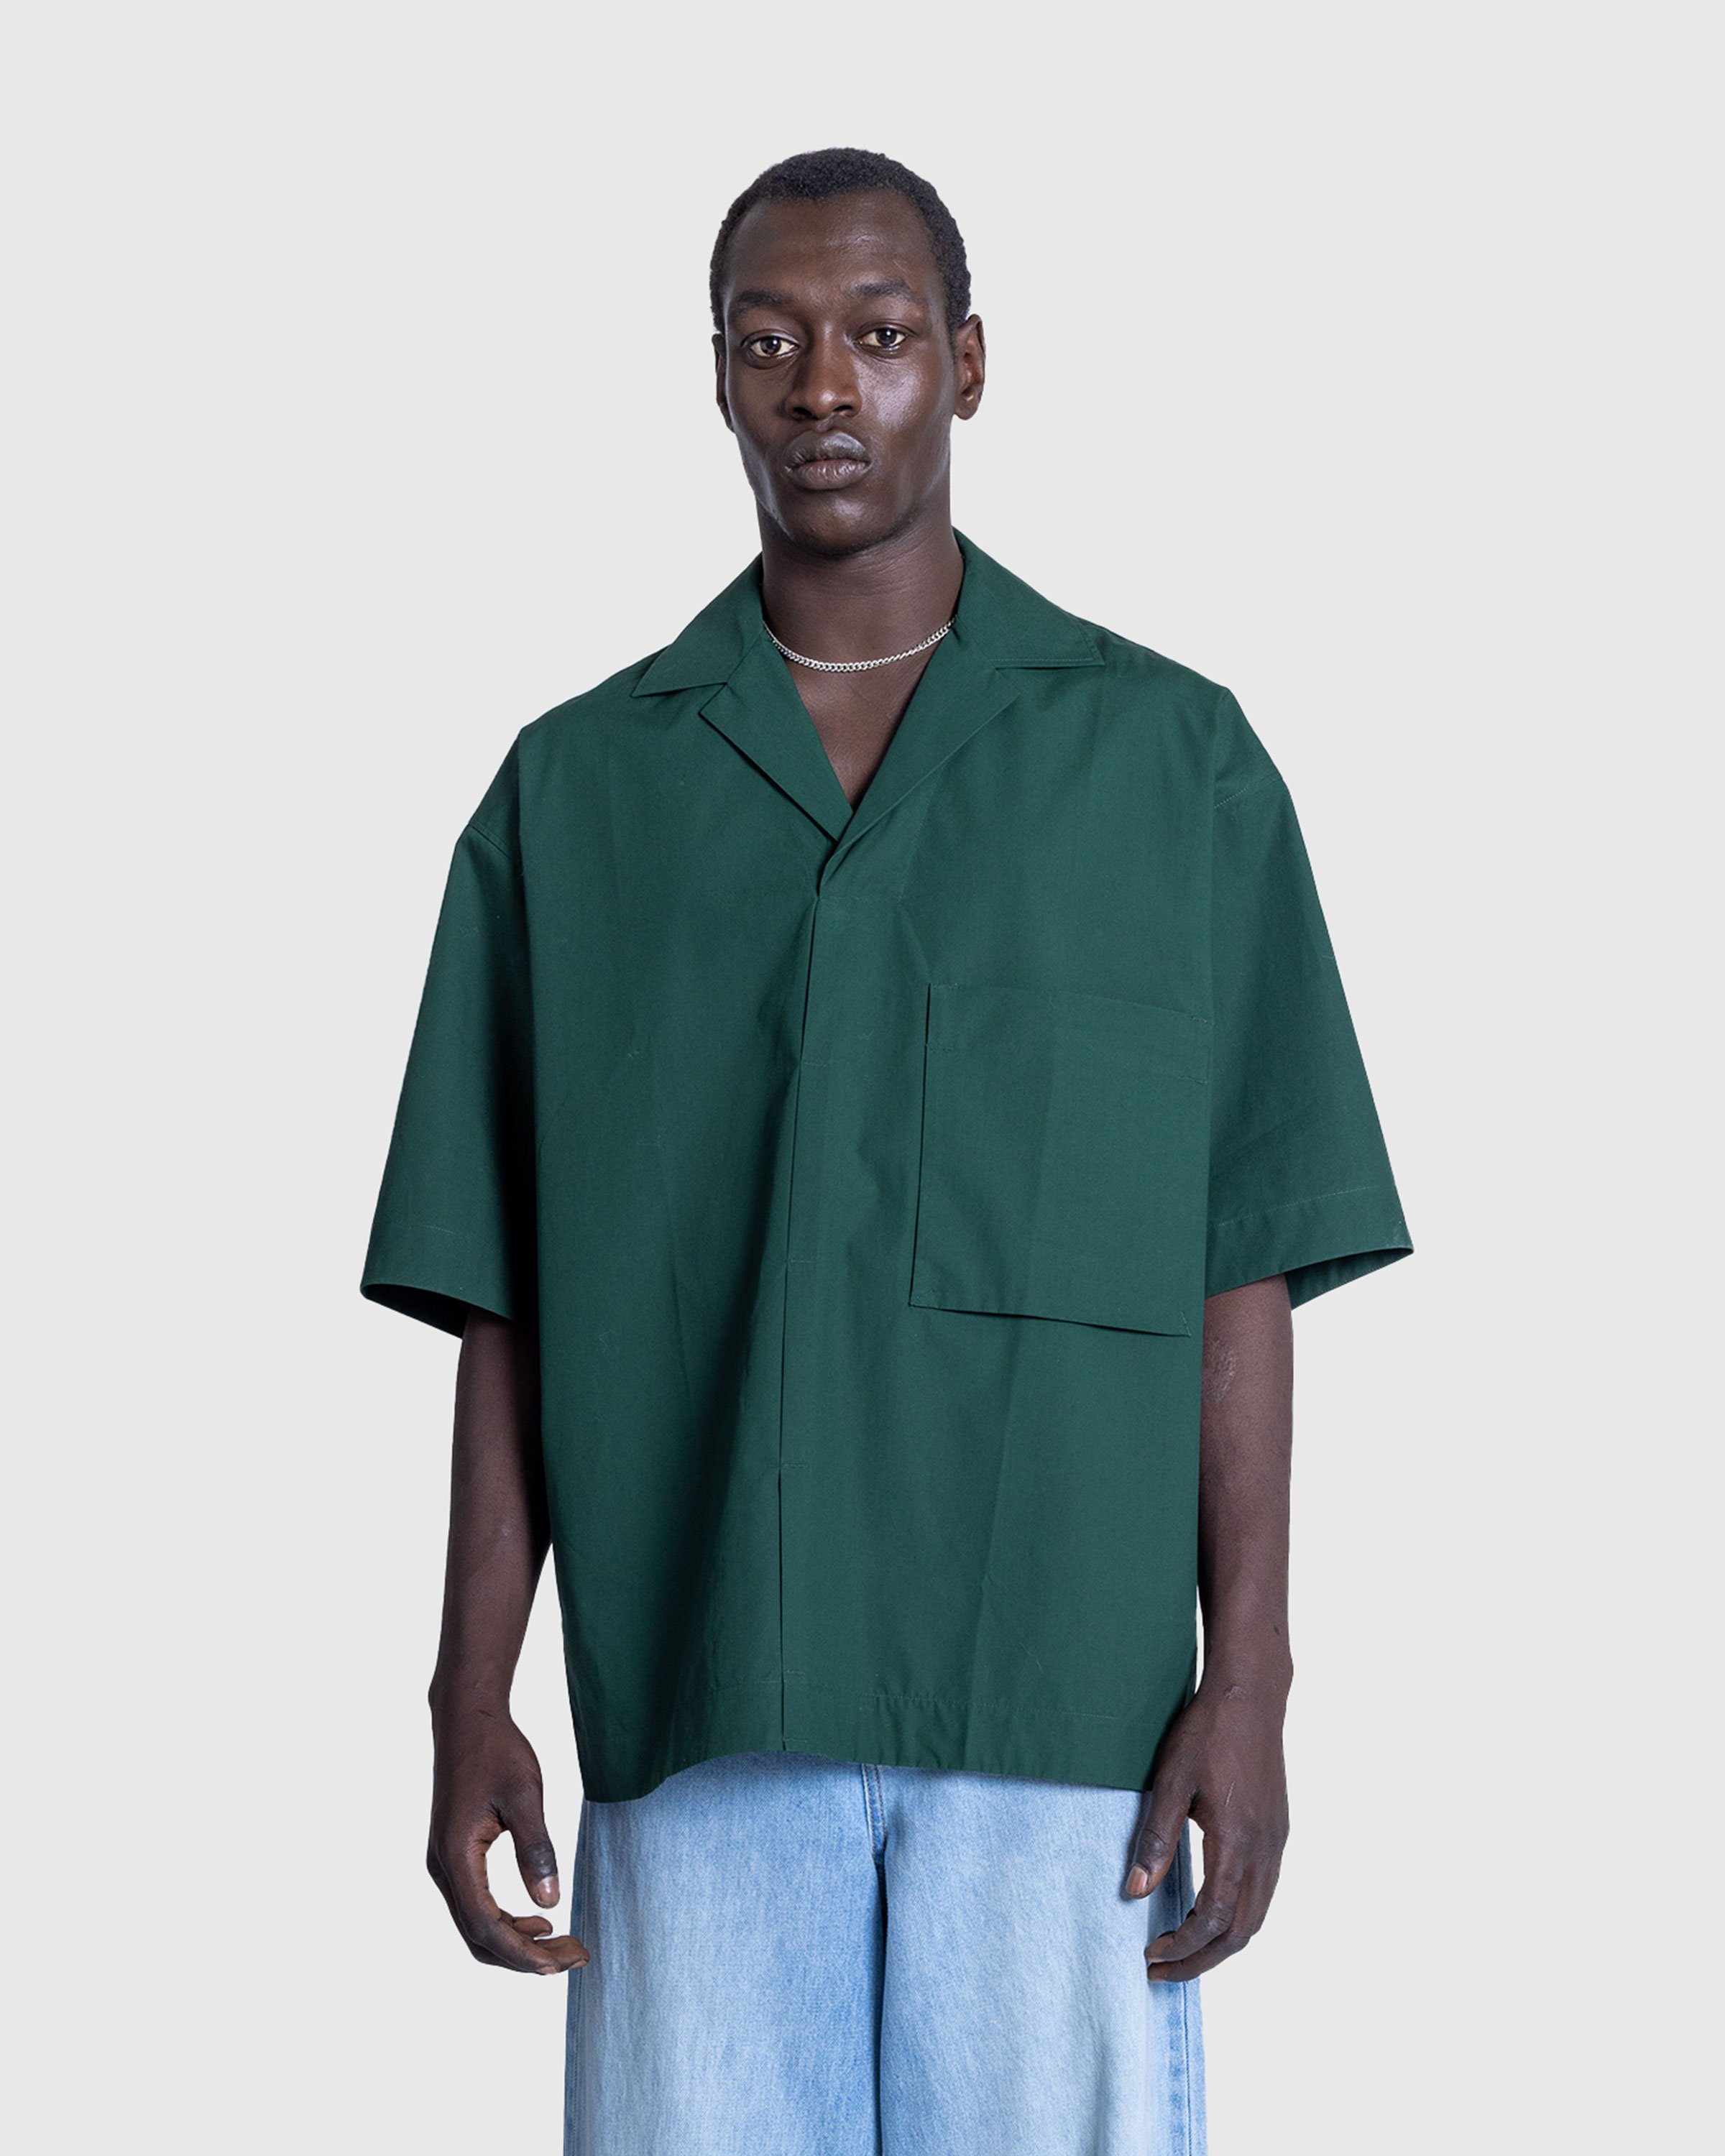 JACQUEMUS - LE HAUT POLO - Clothing - Green - Image 2